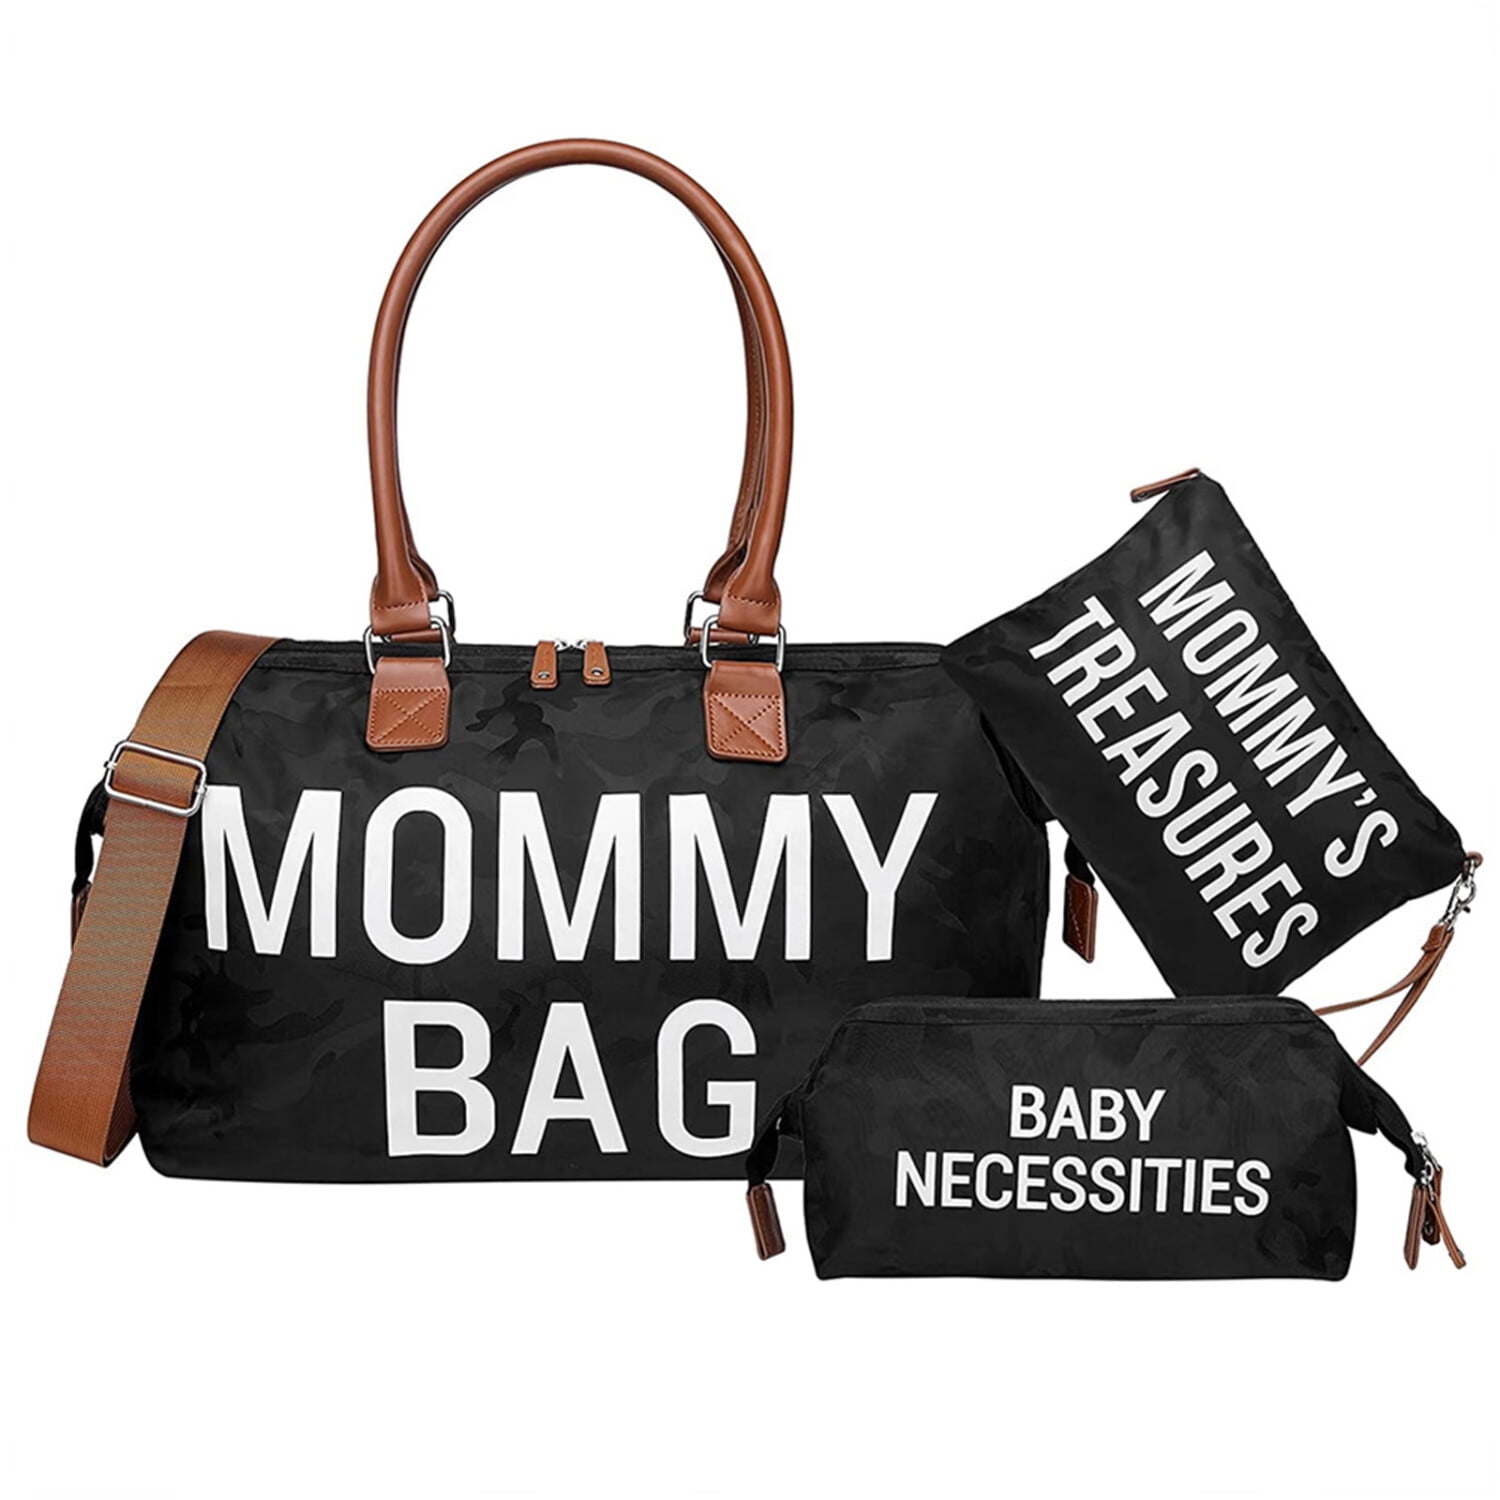 Mommy Bag for Hospital Multifunctional Large Diaper Handbag Tote